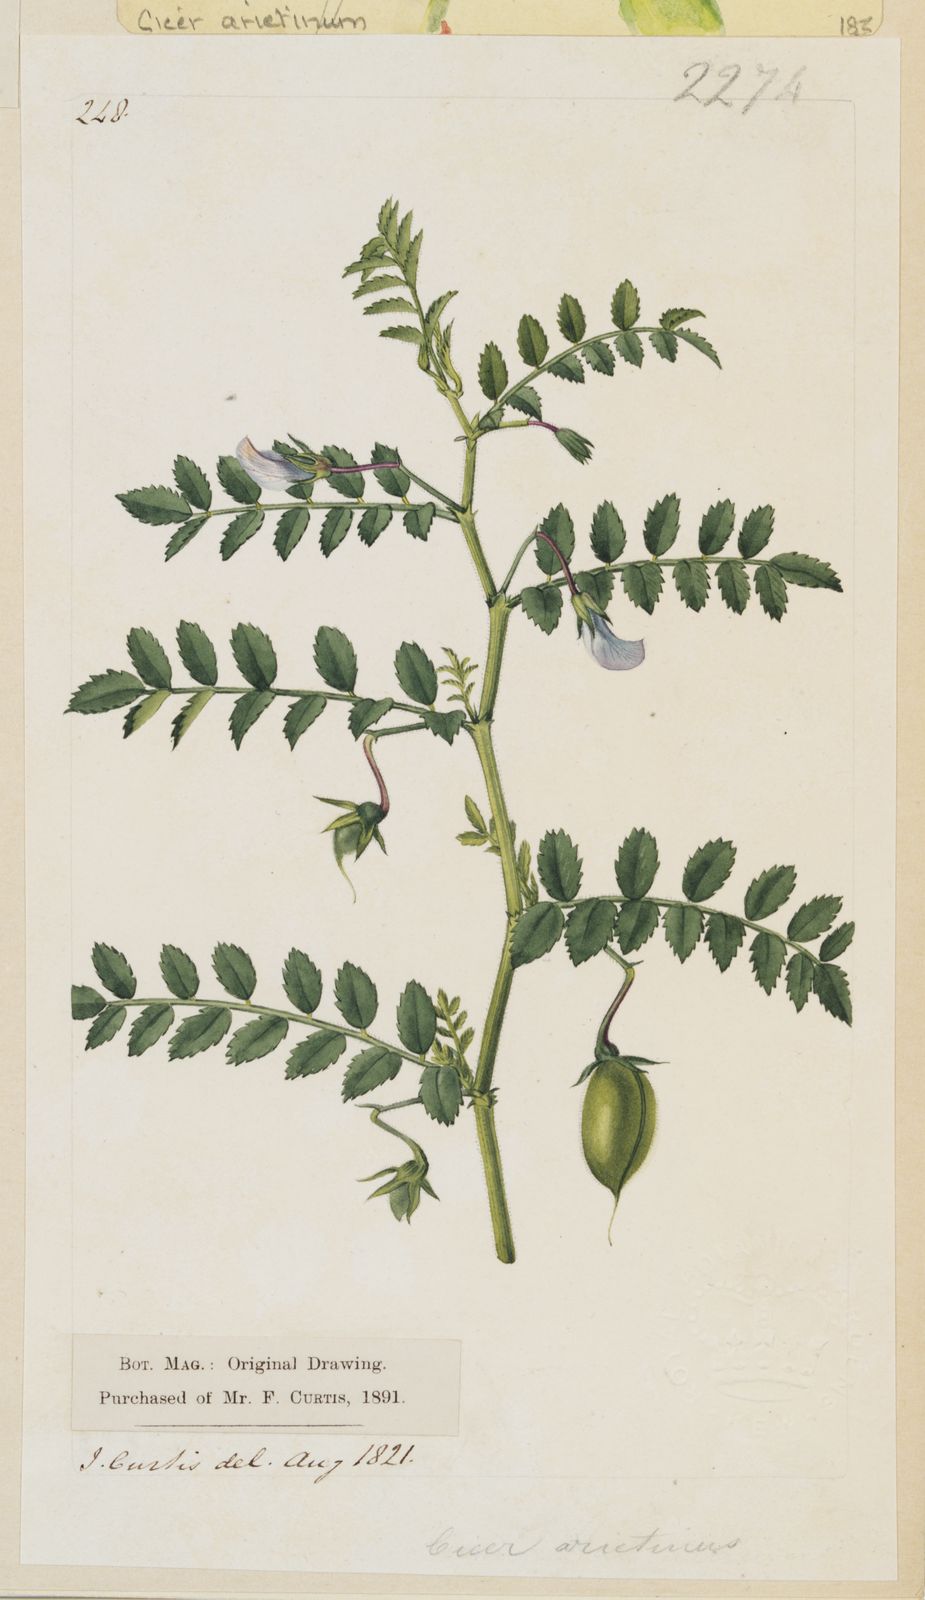 Illustration of chickpea plant